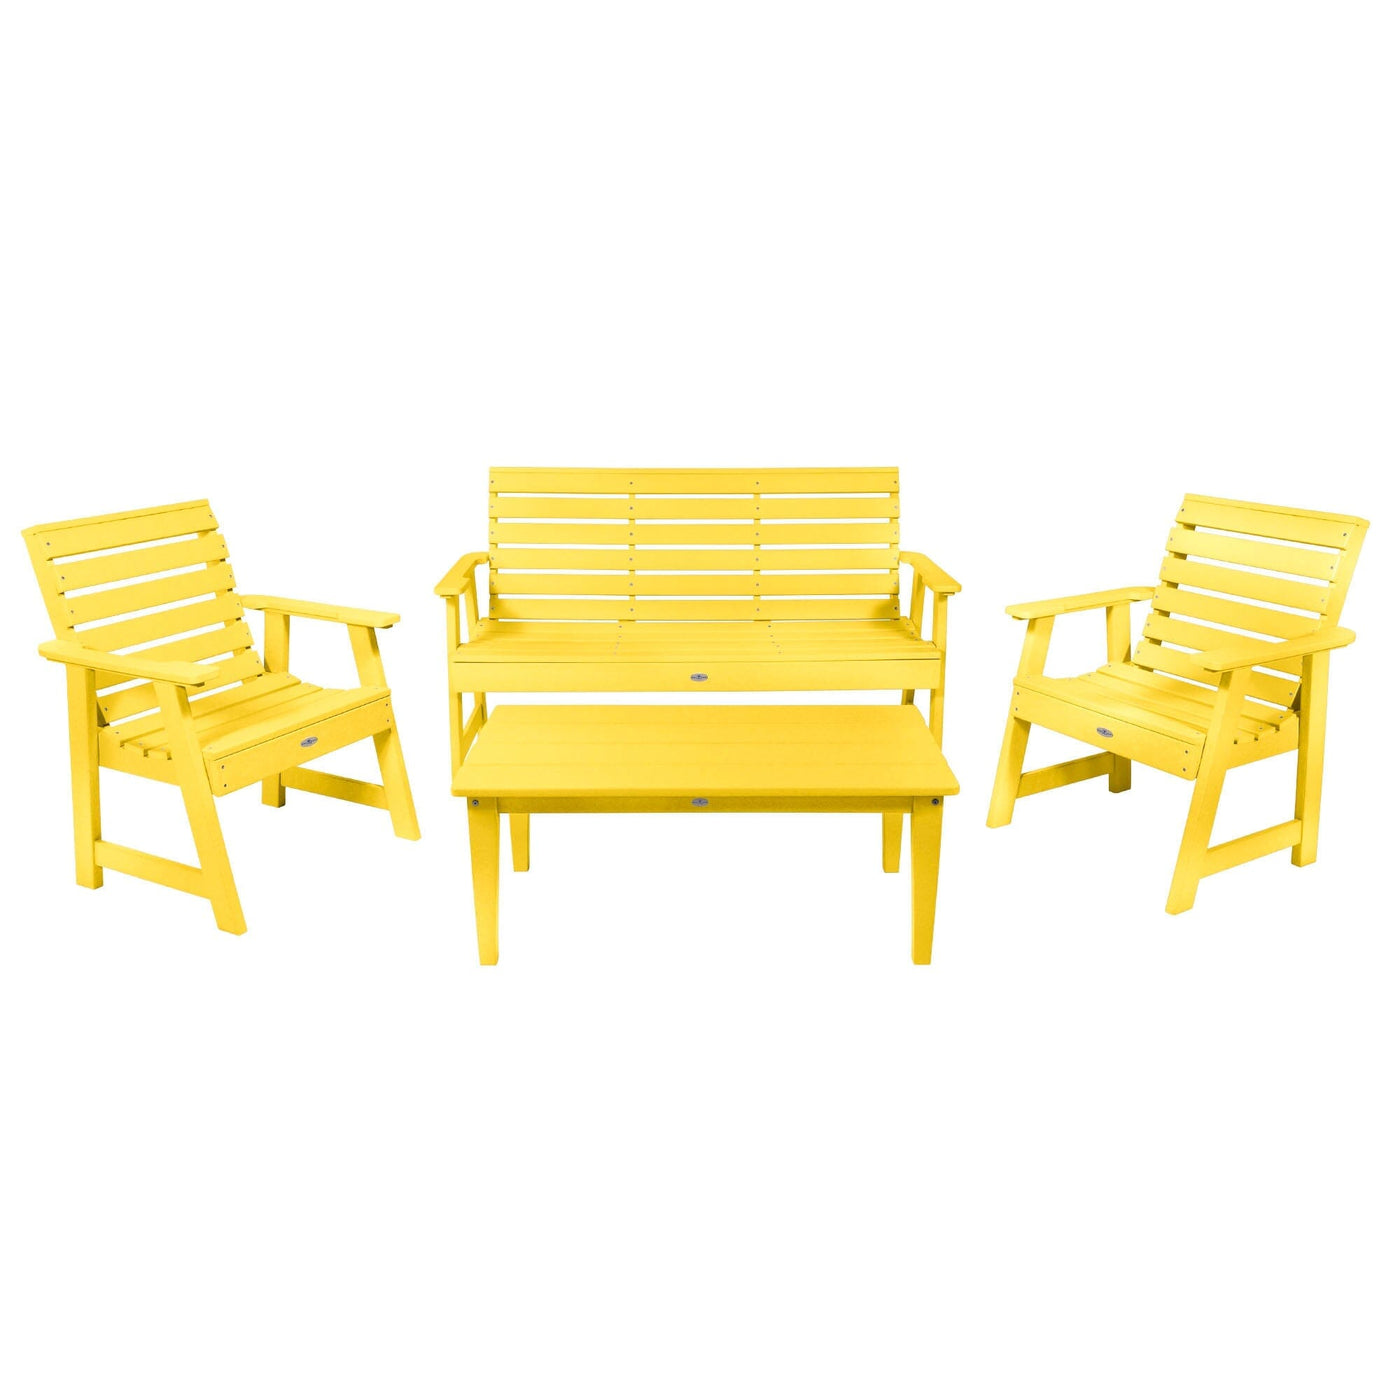 Riverside Garden Bench 5ft, 2 Garden Chairs and Conversation Table Set Kitted Set Bahia Verde Outdoors Sunbeam Yellow 